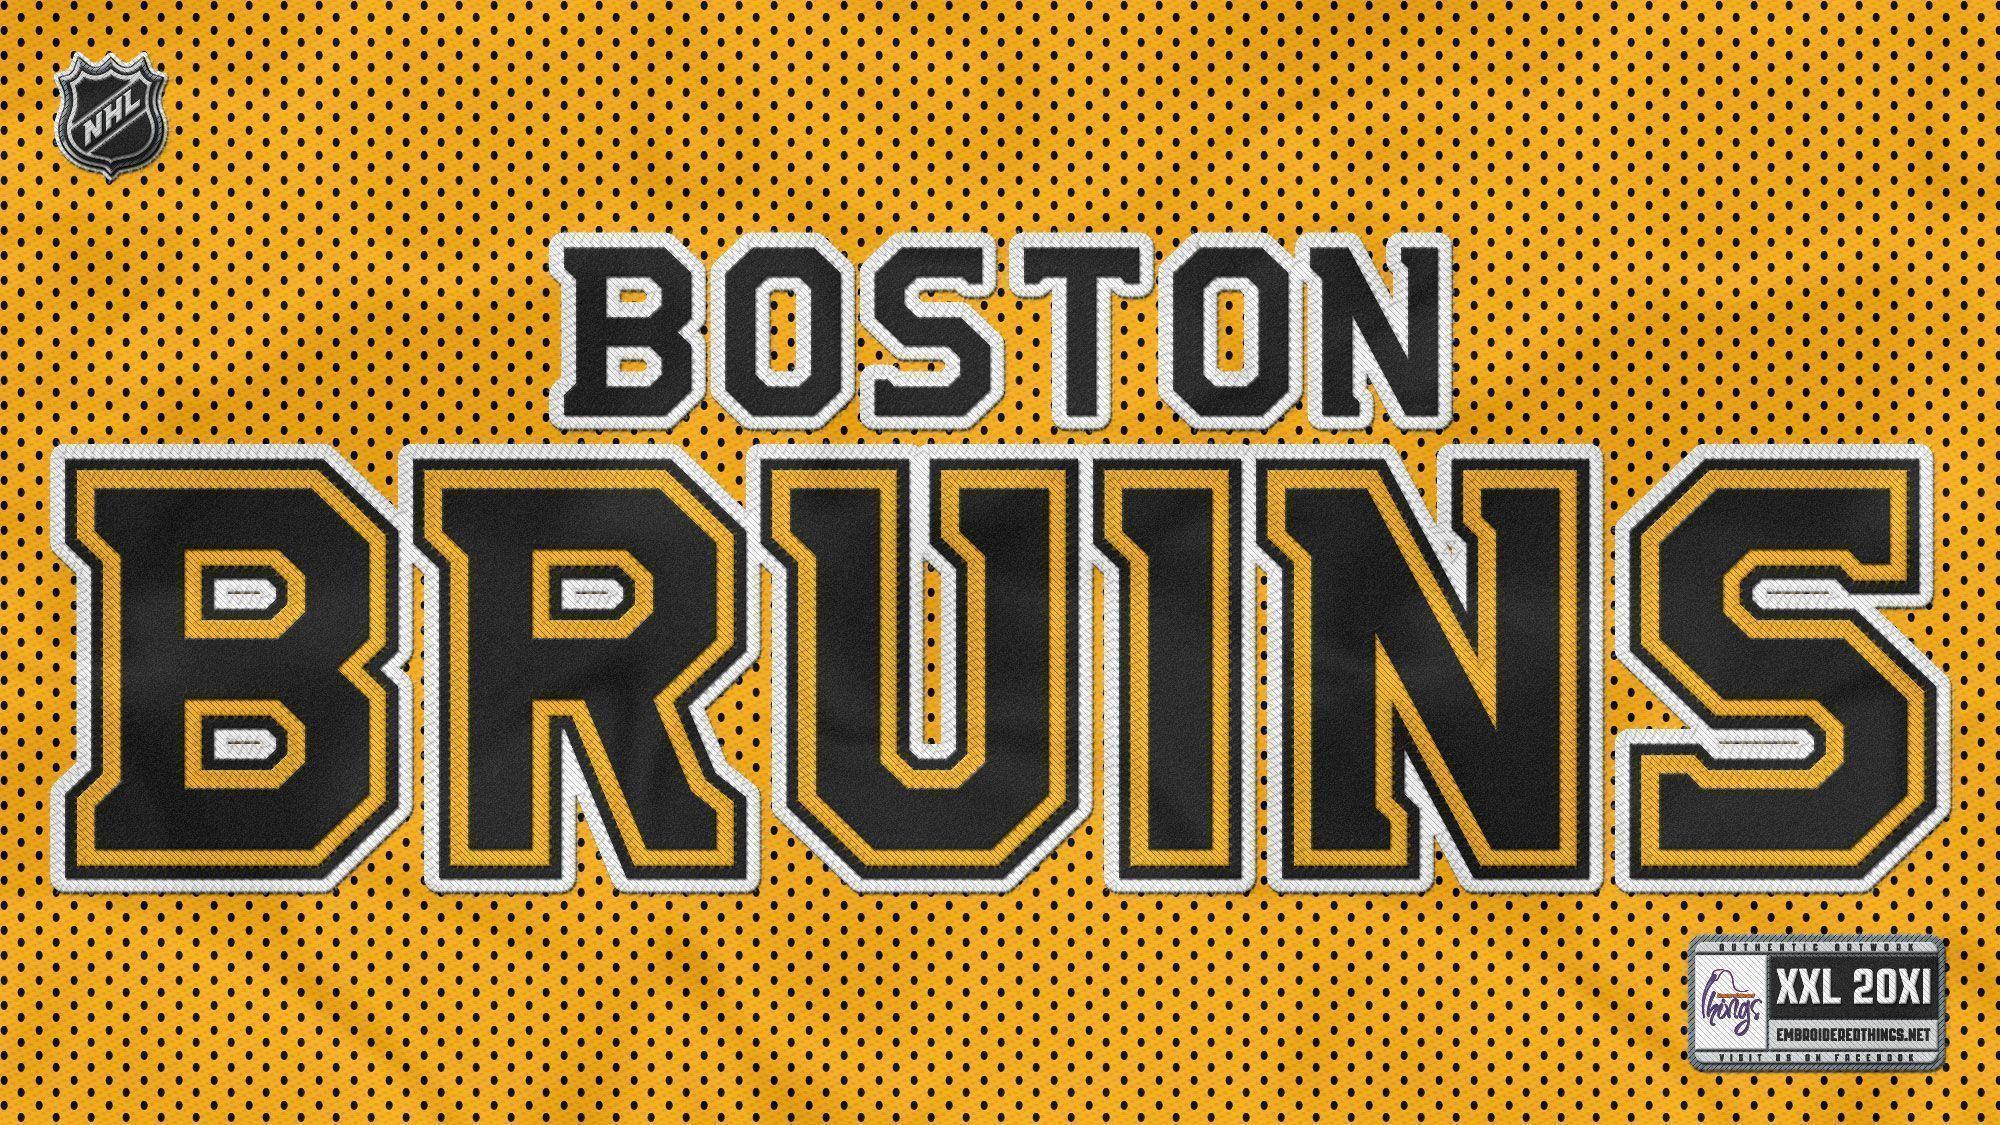 Free Boston Bruins desktop image. Boston Bruins wallpaper